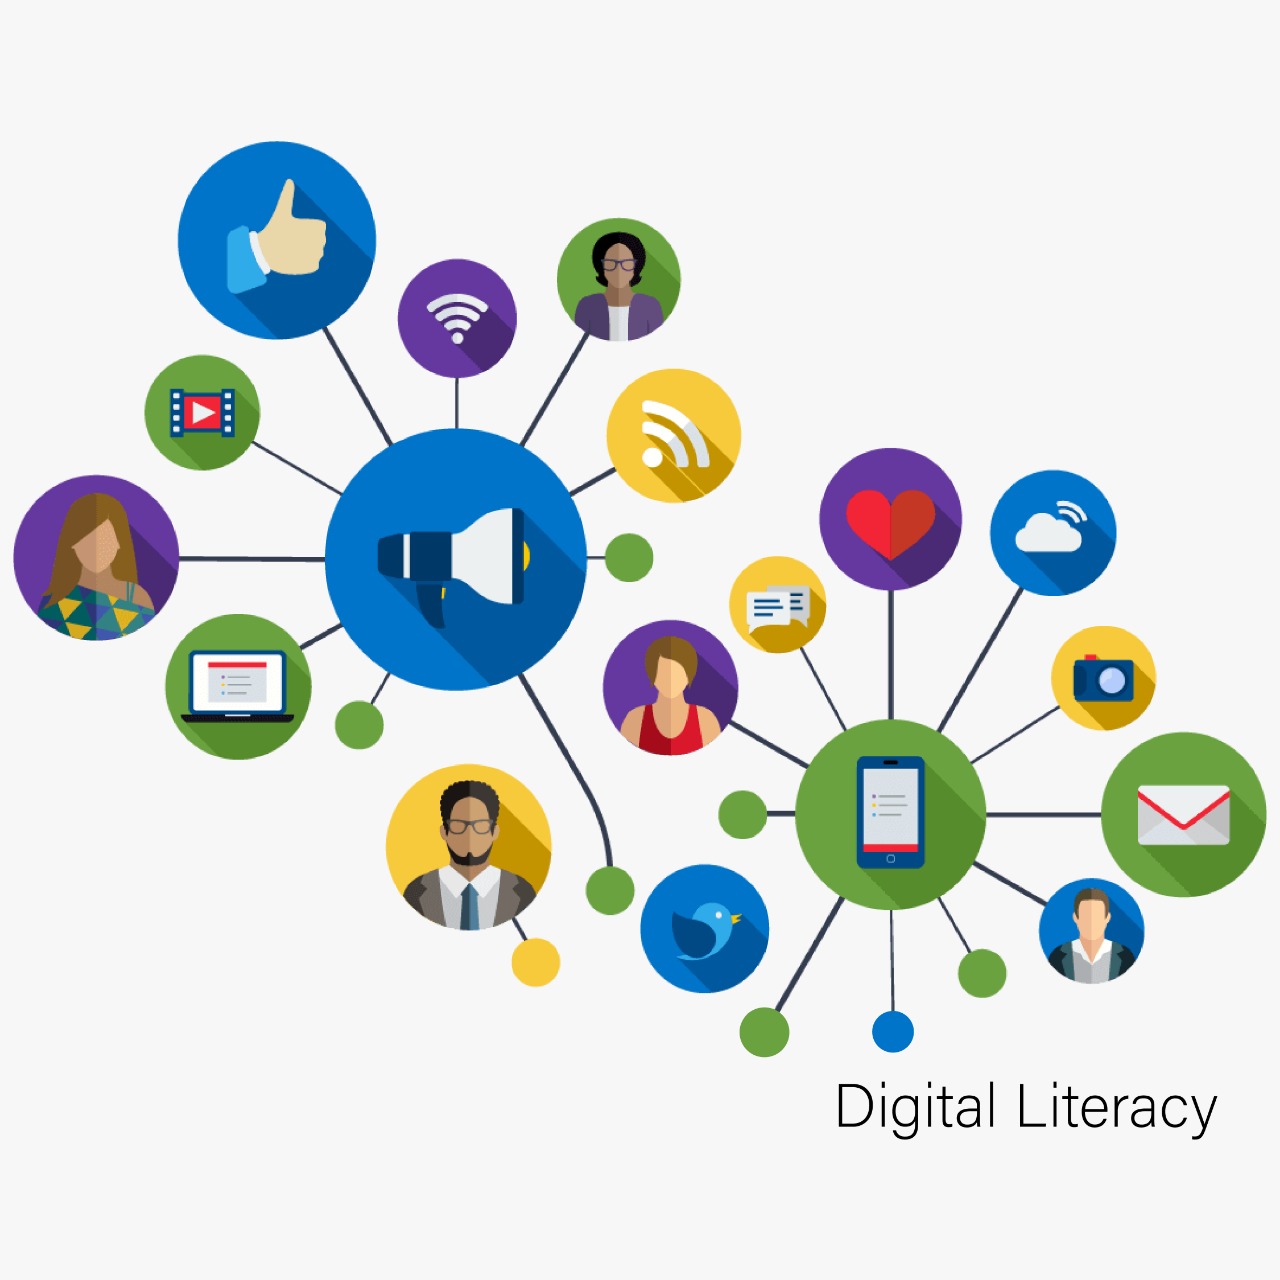 digital literacy skills in the 21st century essay